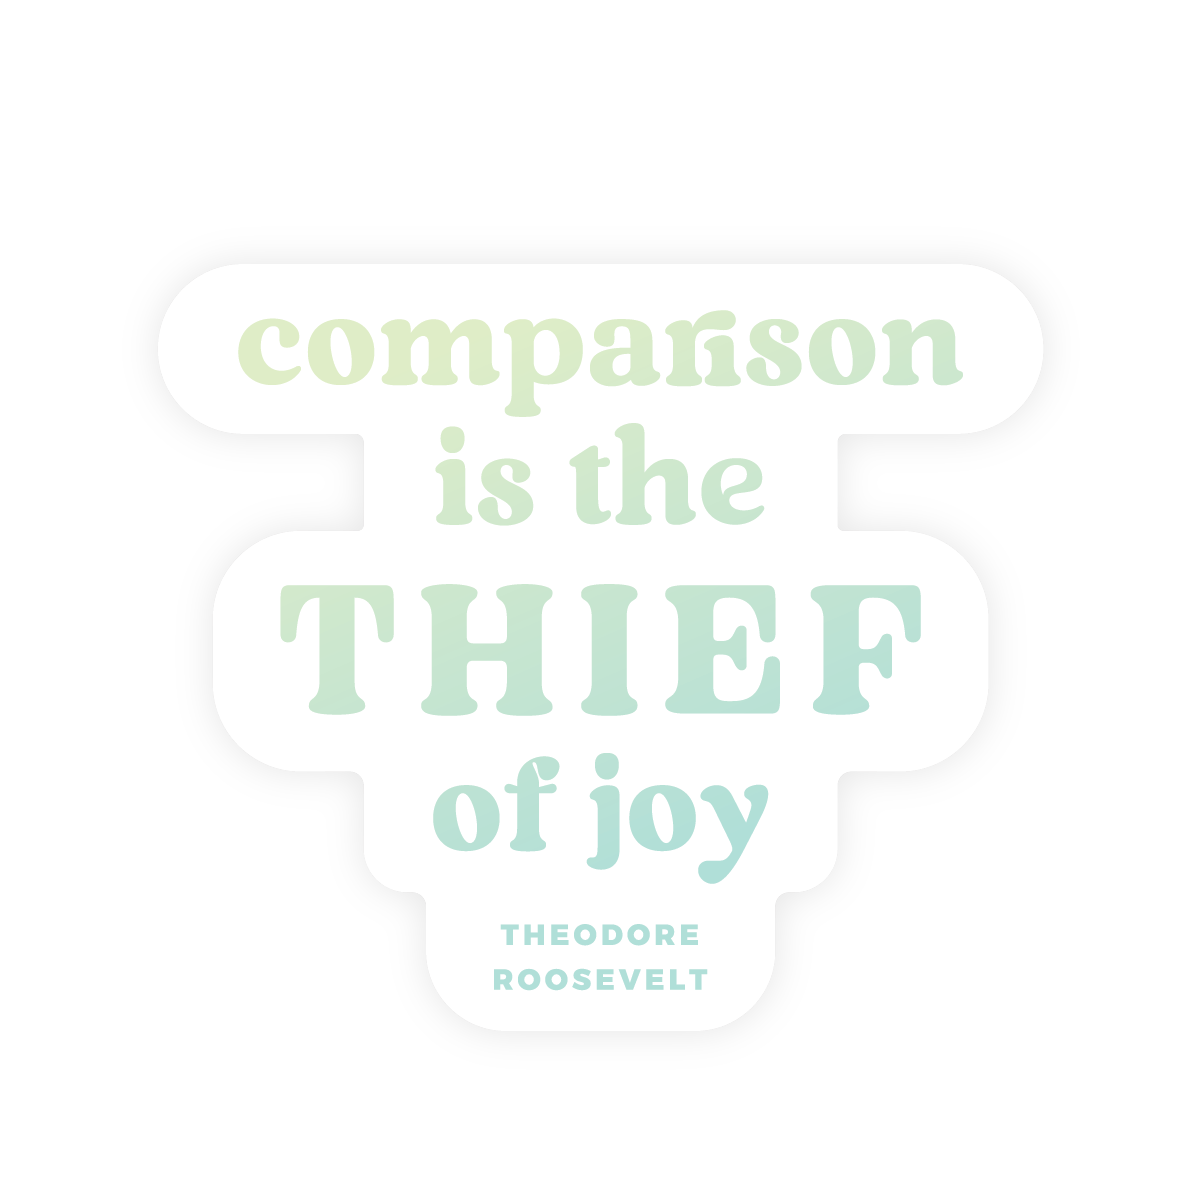 Inspirational Restickable Sticker - Comparison Thief of Joy